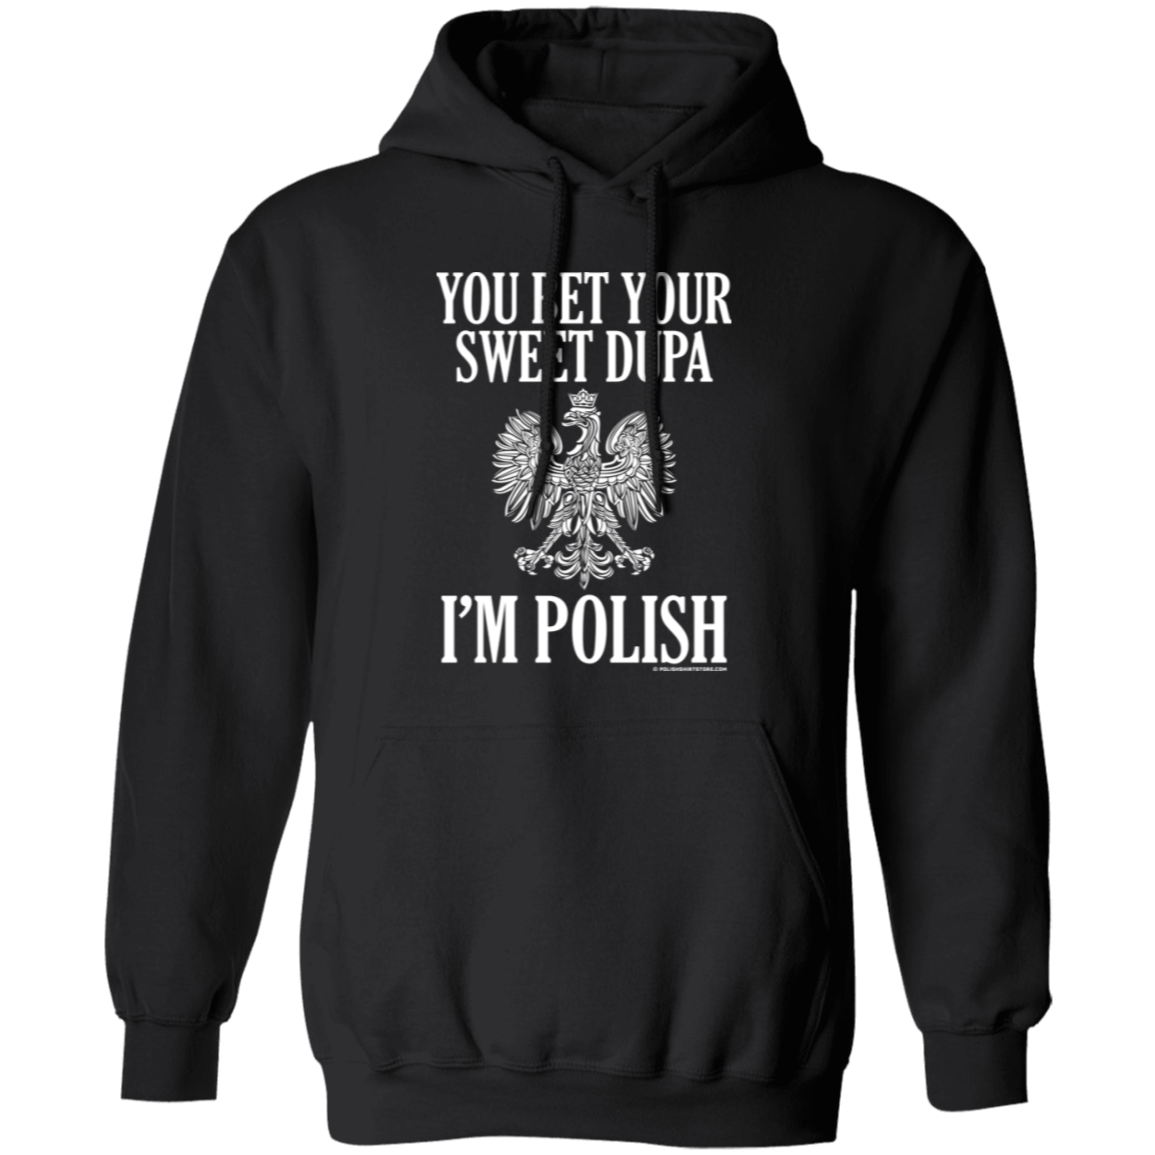 You Bet Your Sweet Dupa I'm Polish Apparel CustomCat G185 Pullover Hoodie Black S